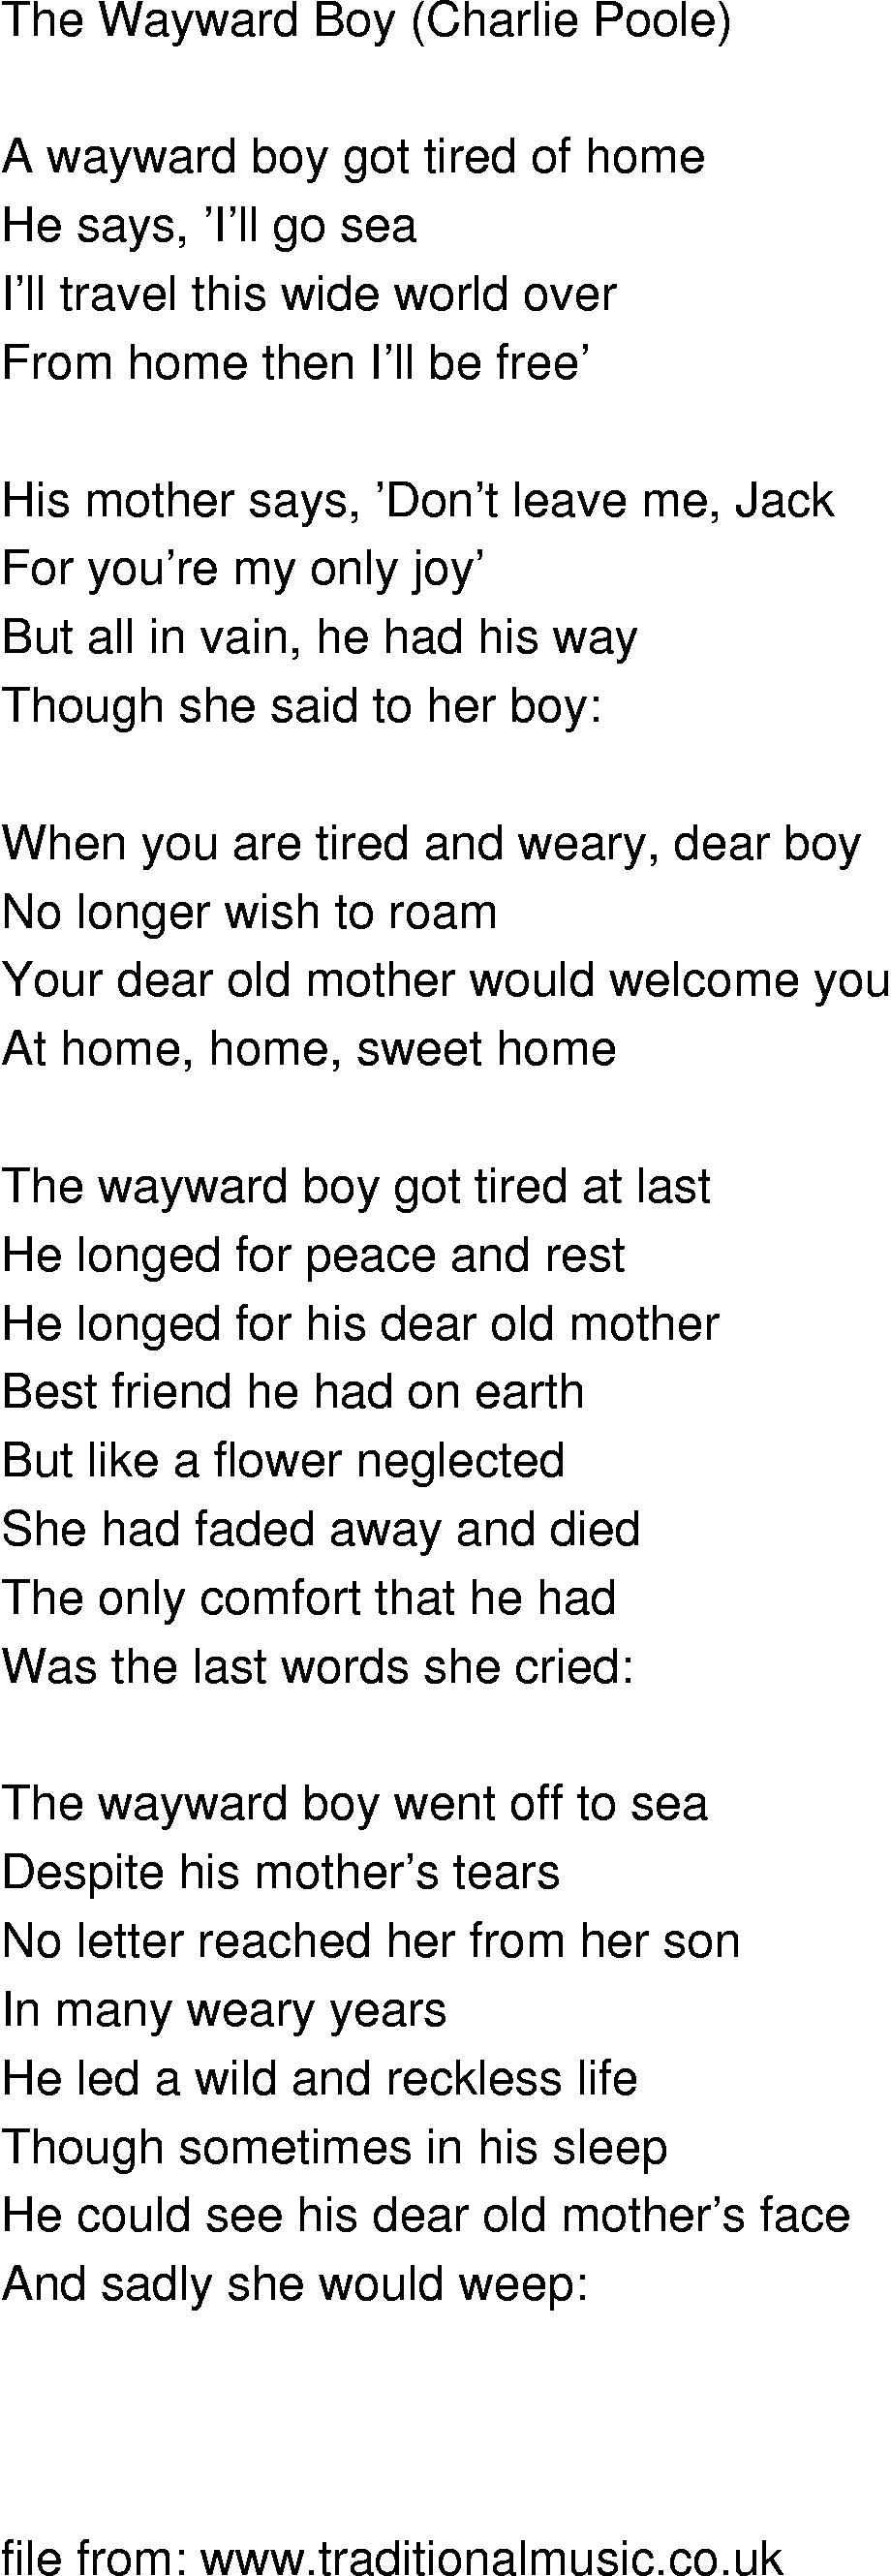 Old-Time (oldtimey) Song Lyrics - wayward boy